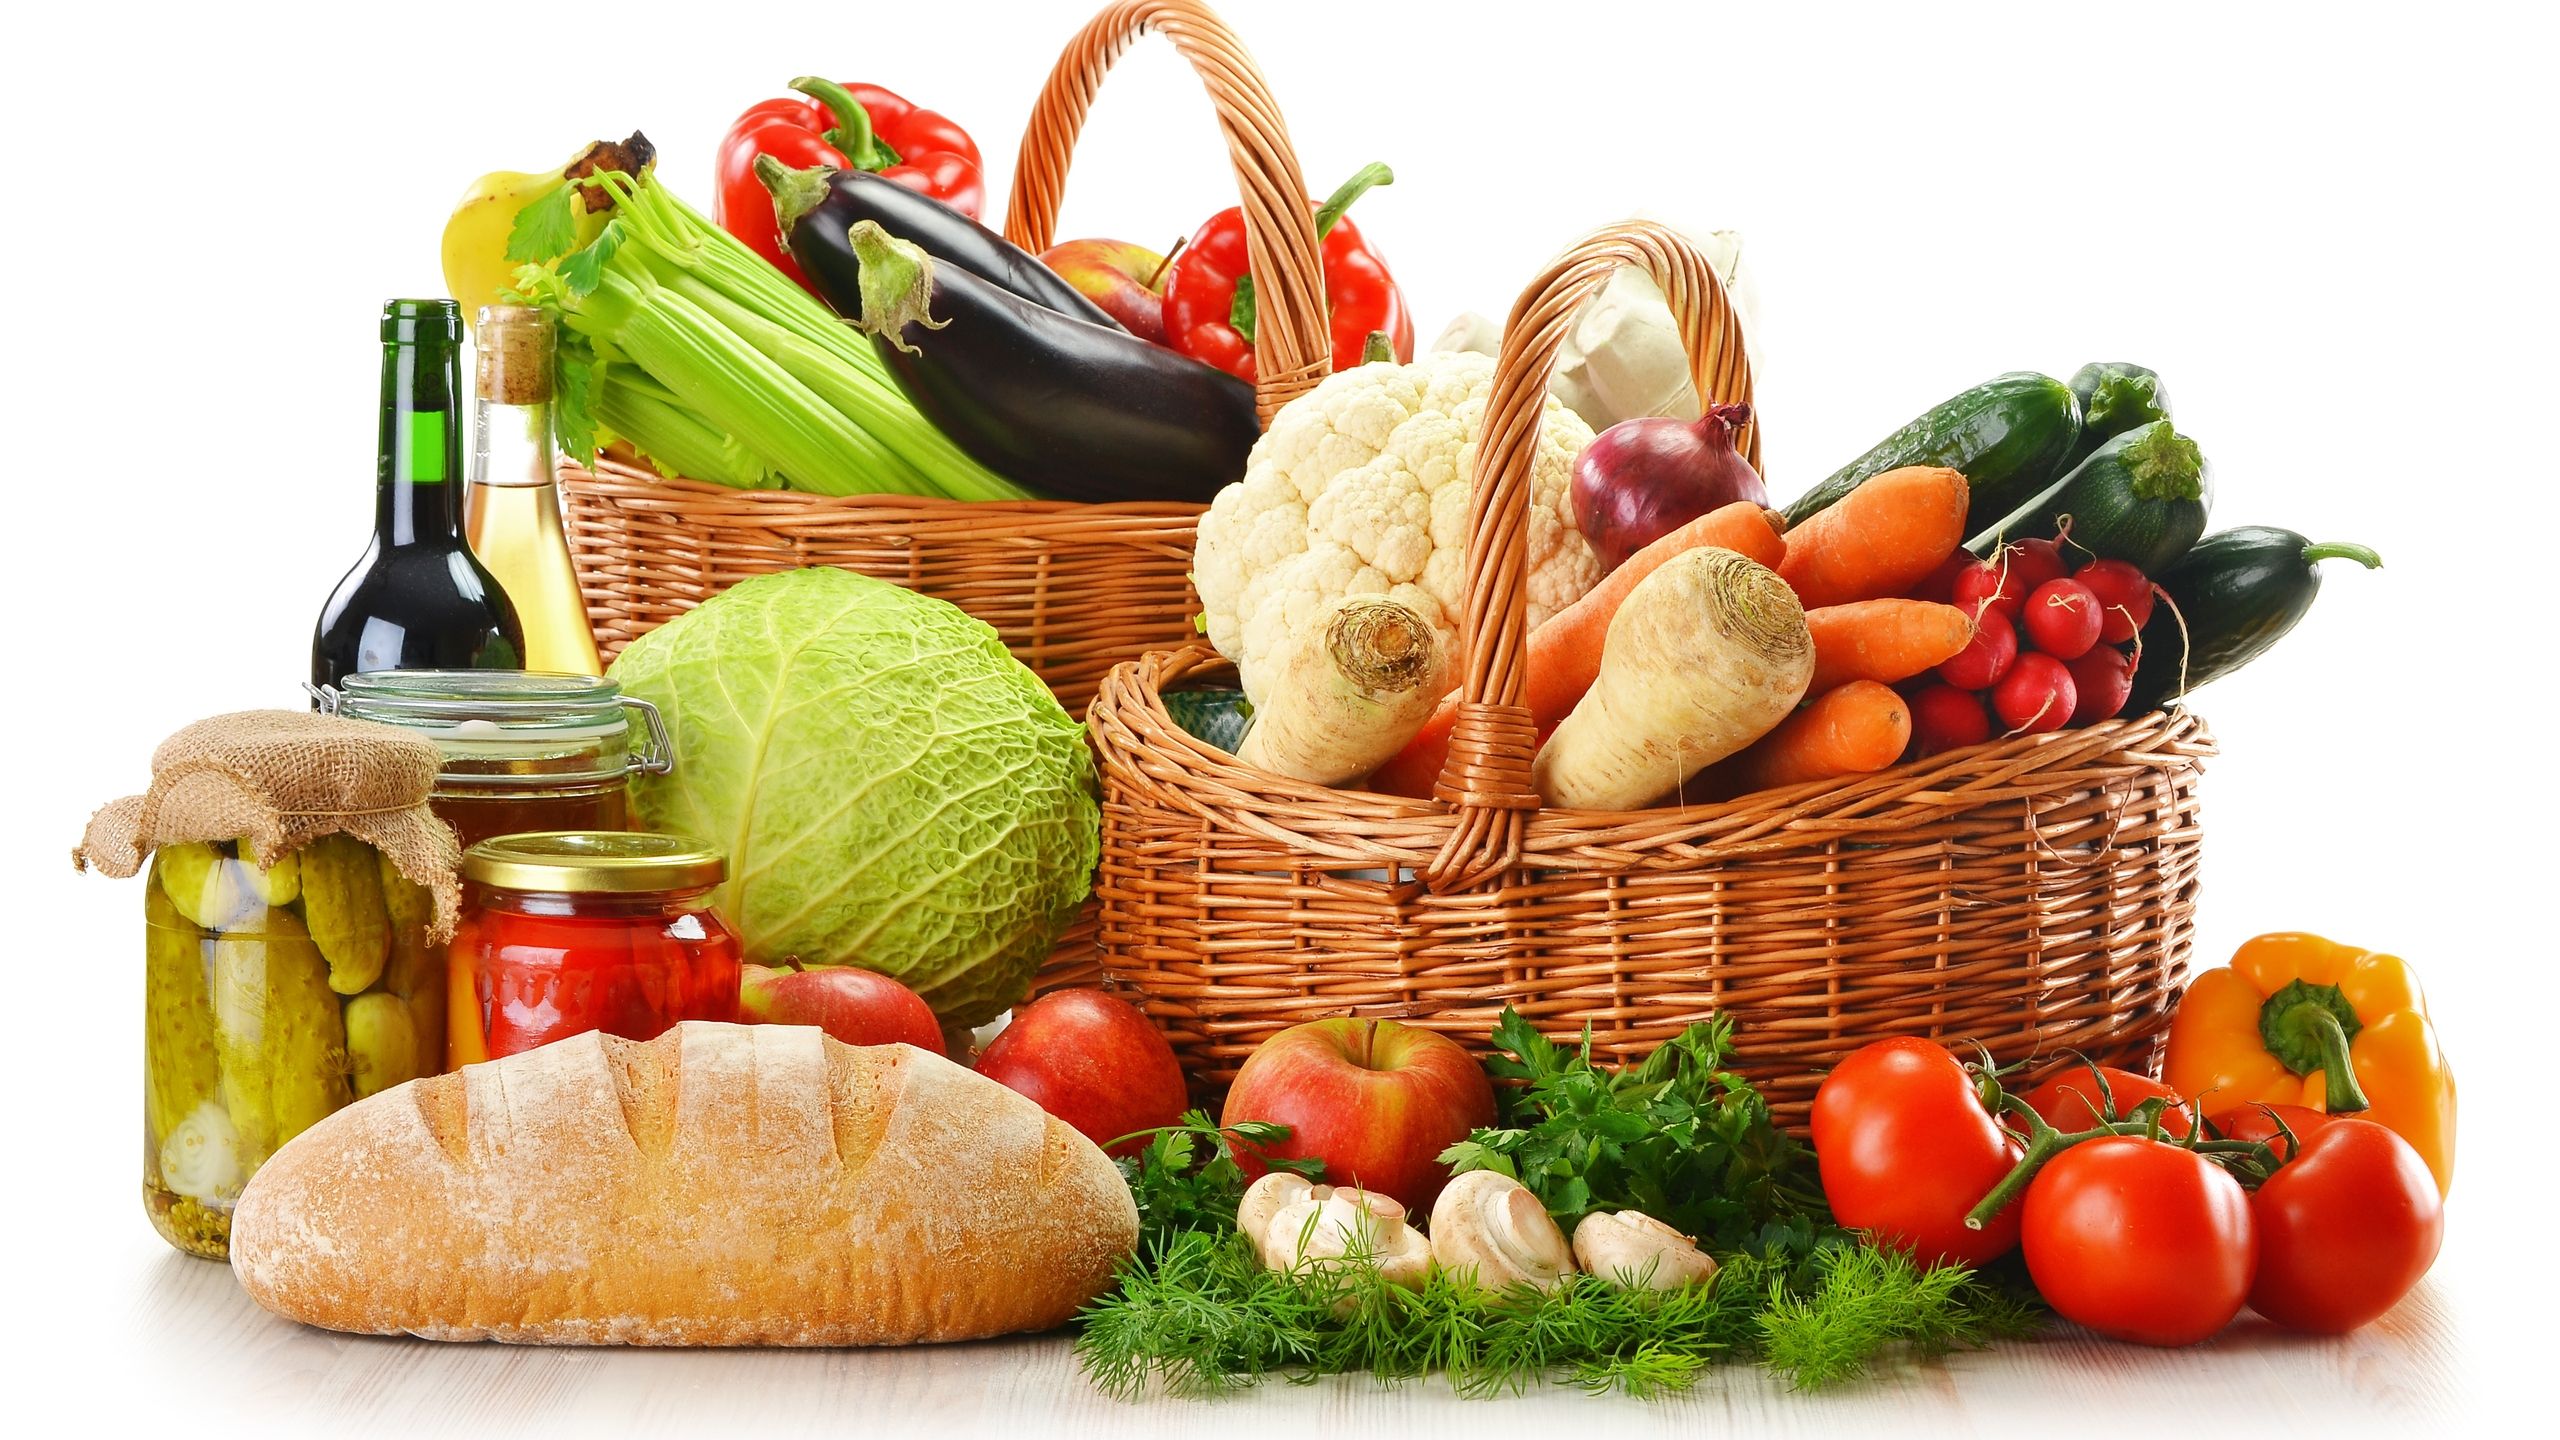 Ricette vegetariane e dieta: 4 ricette consigliate!